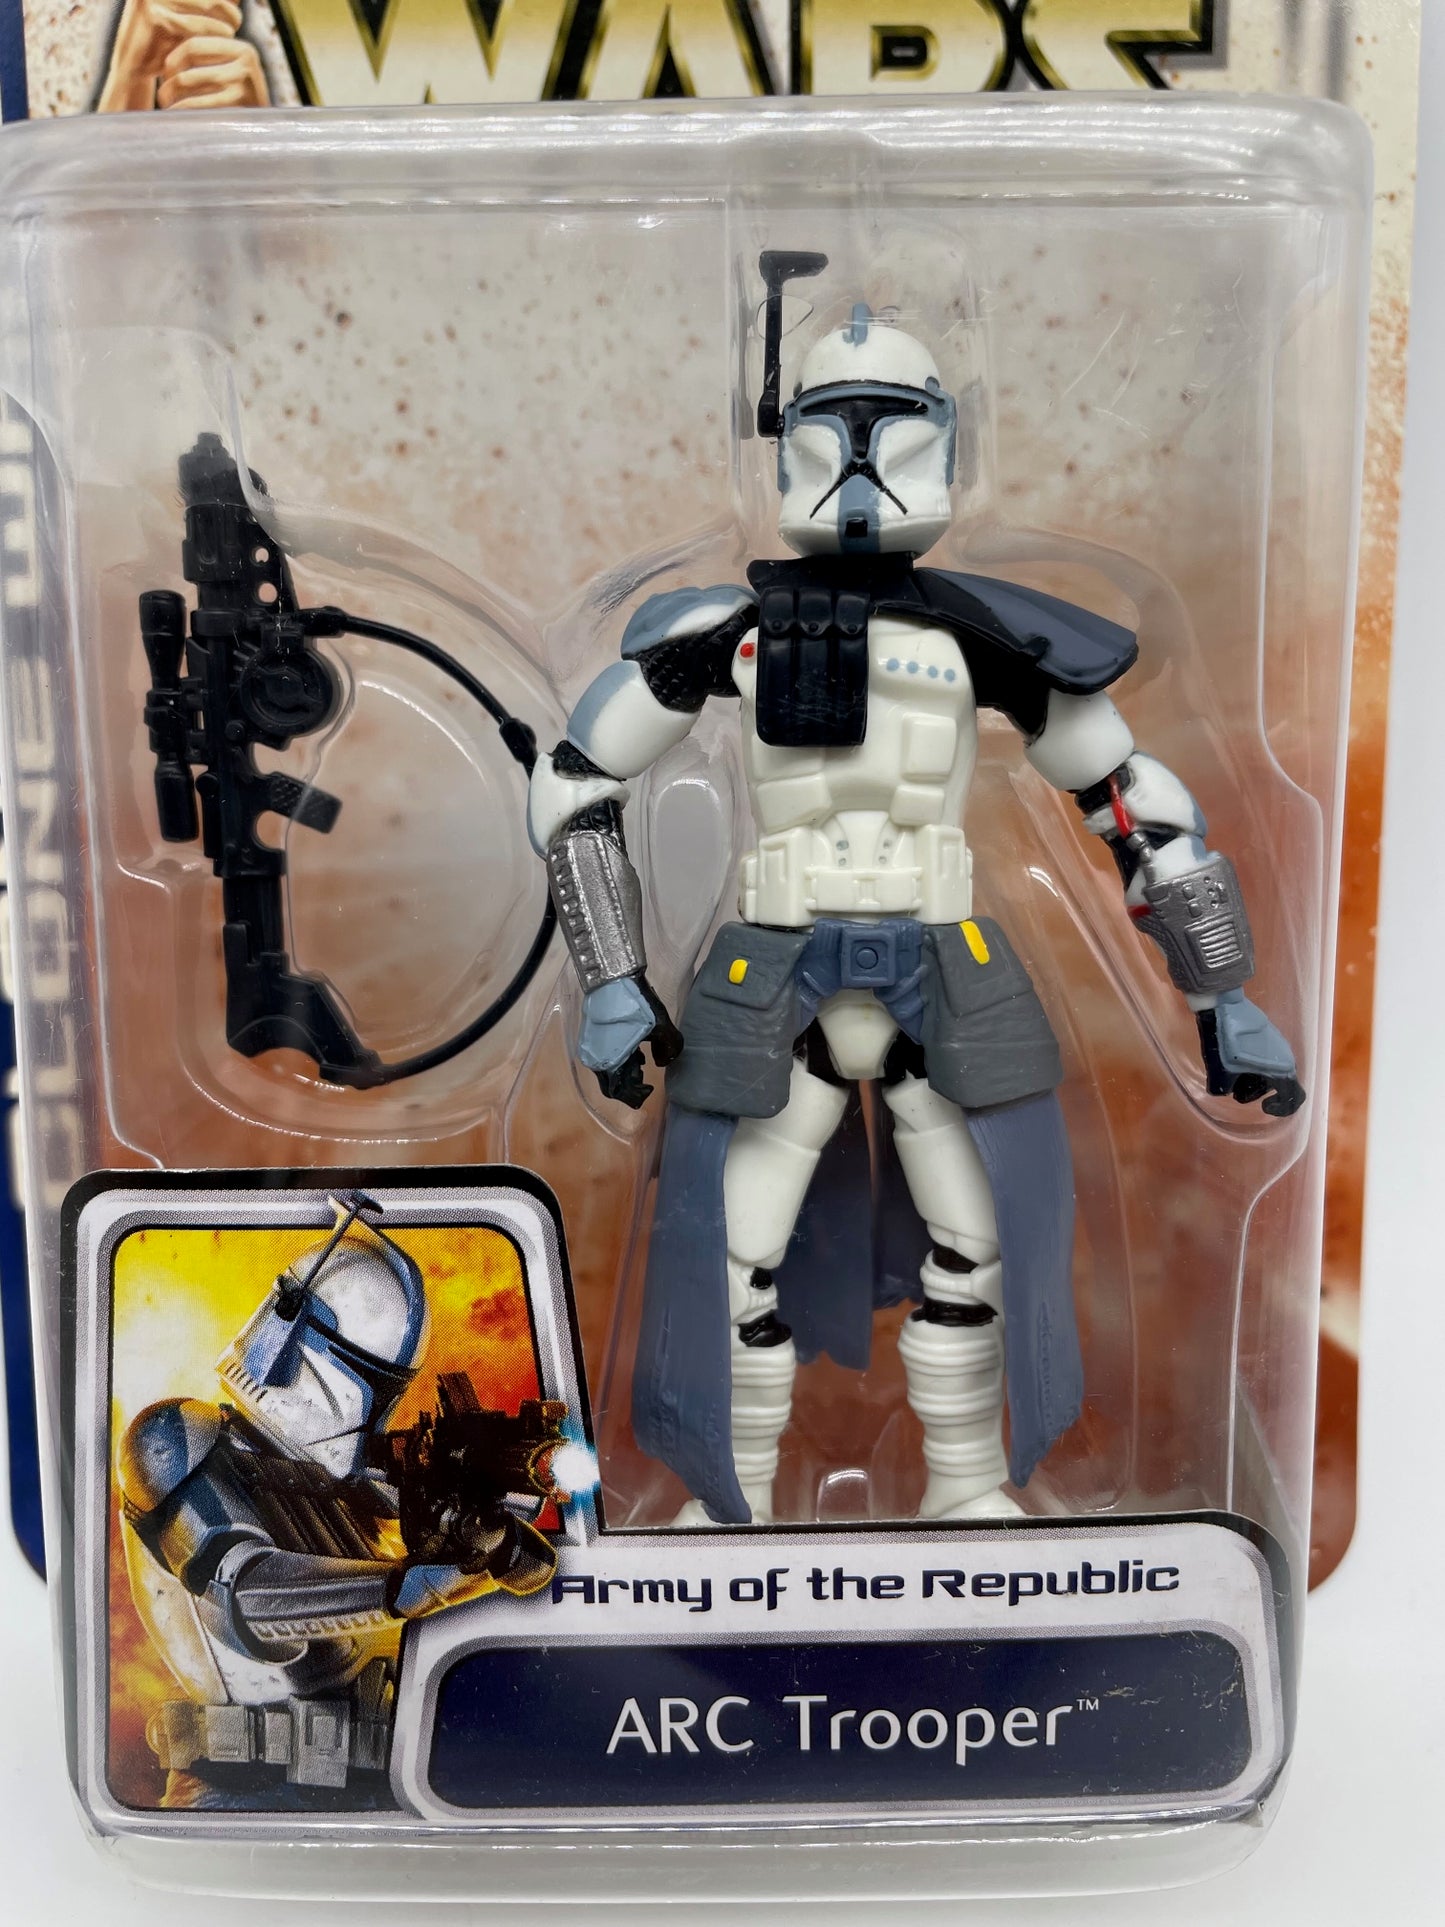 Clone Wars ARC Trooper Figure, Hasbro 2003